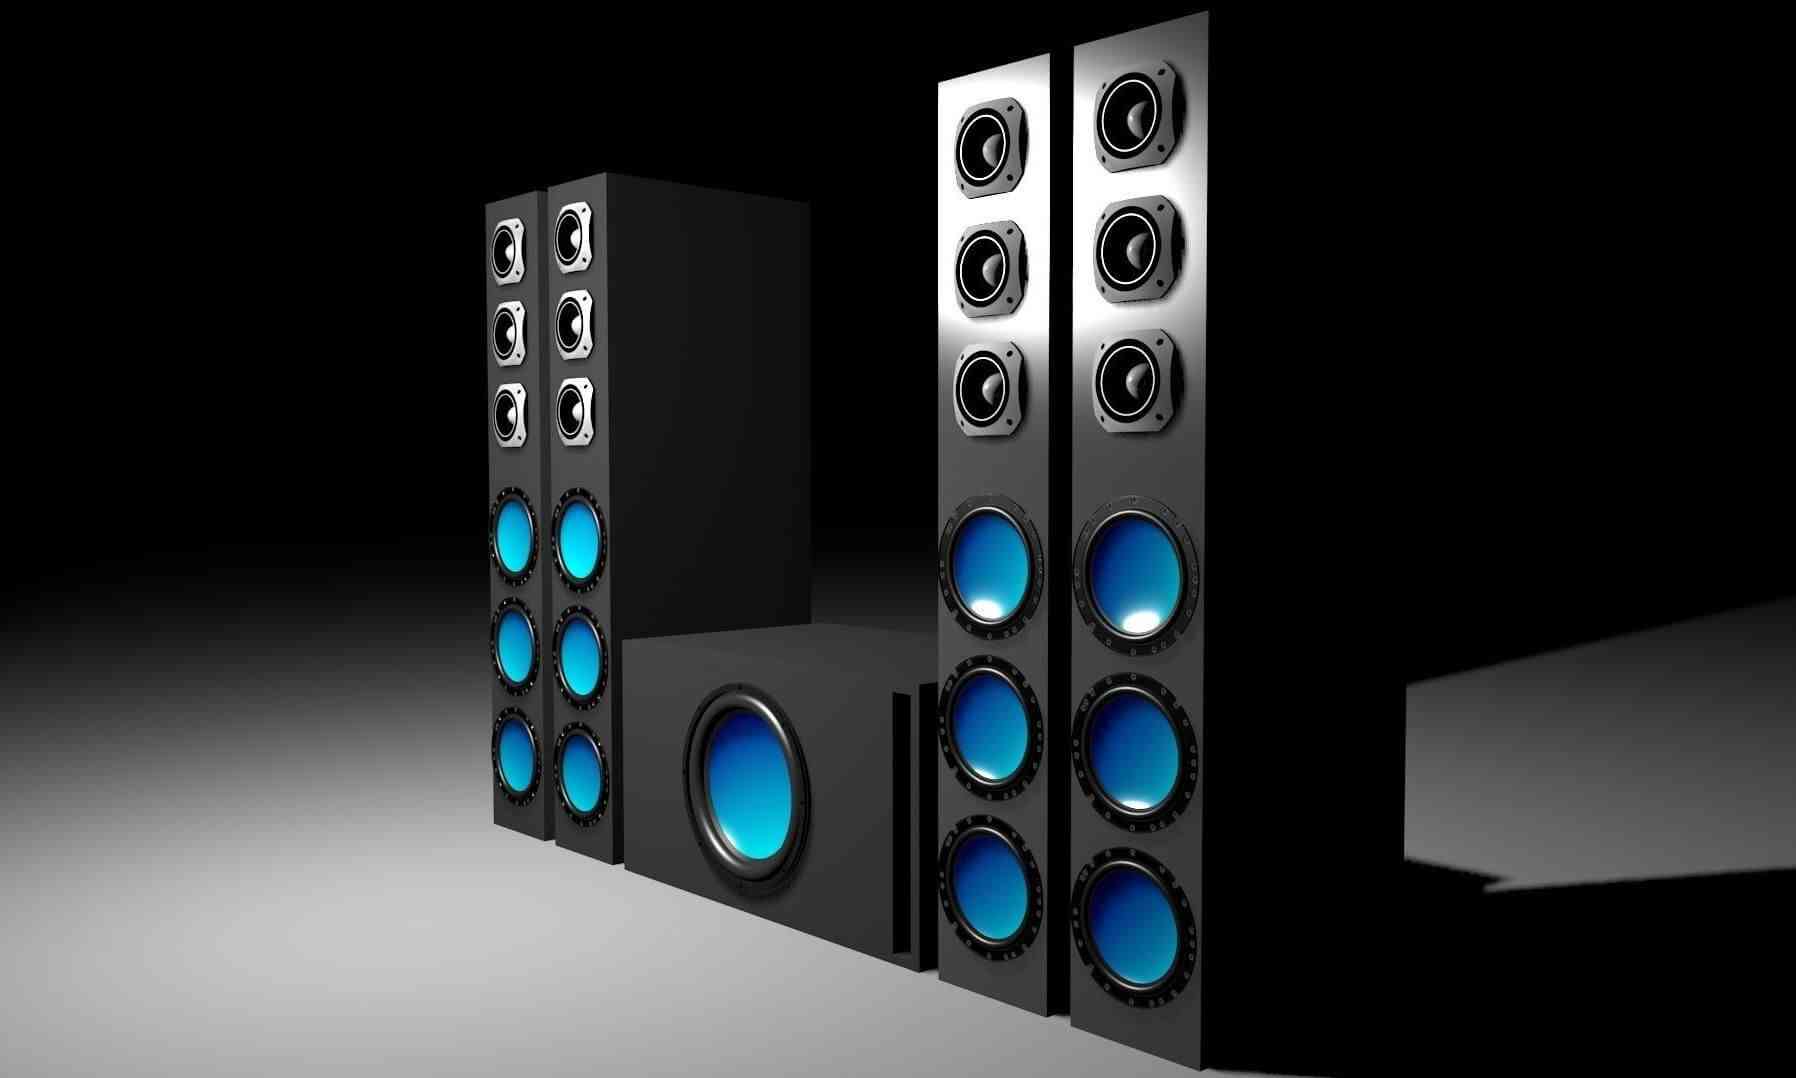 best tower speakers under 10000